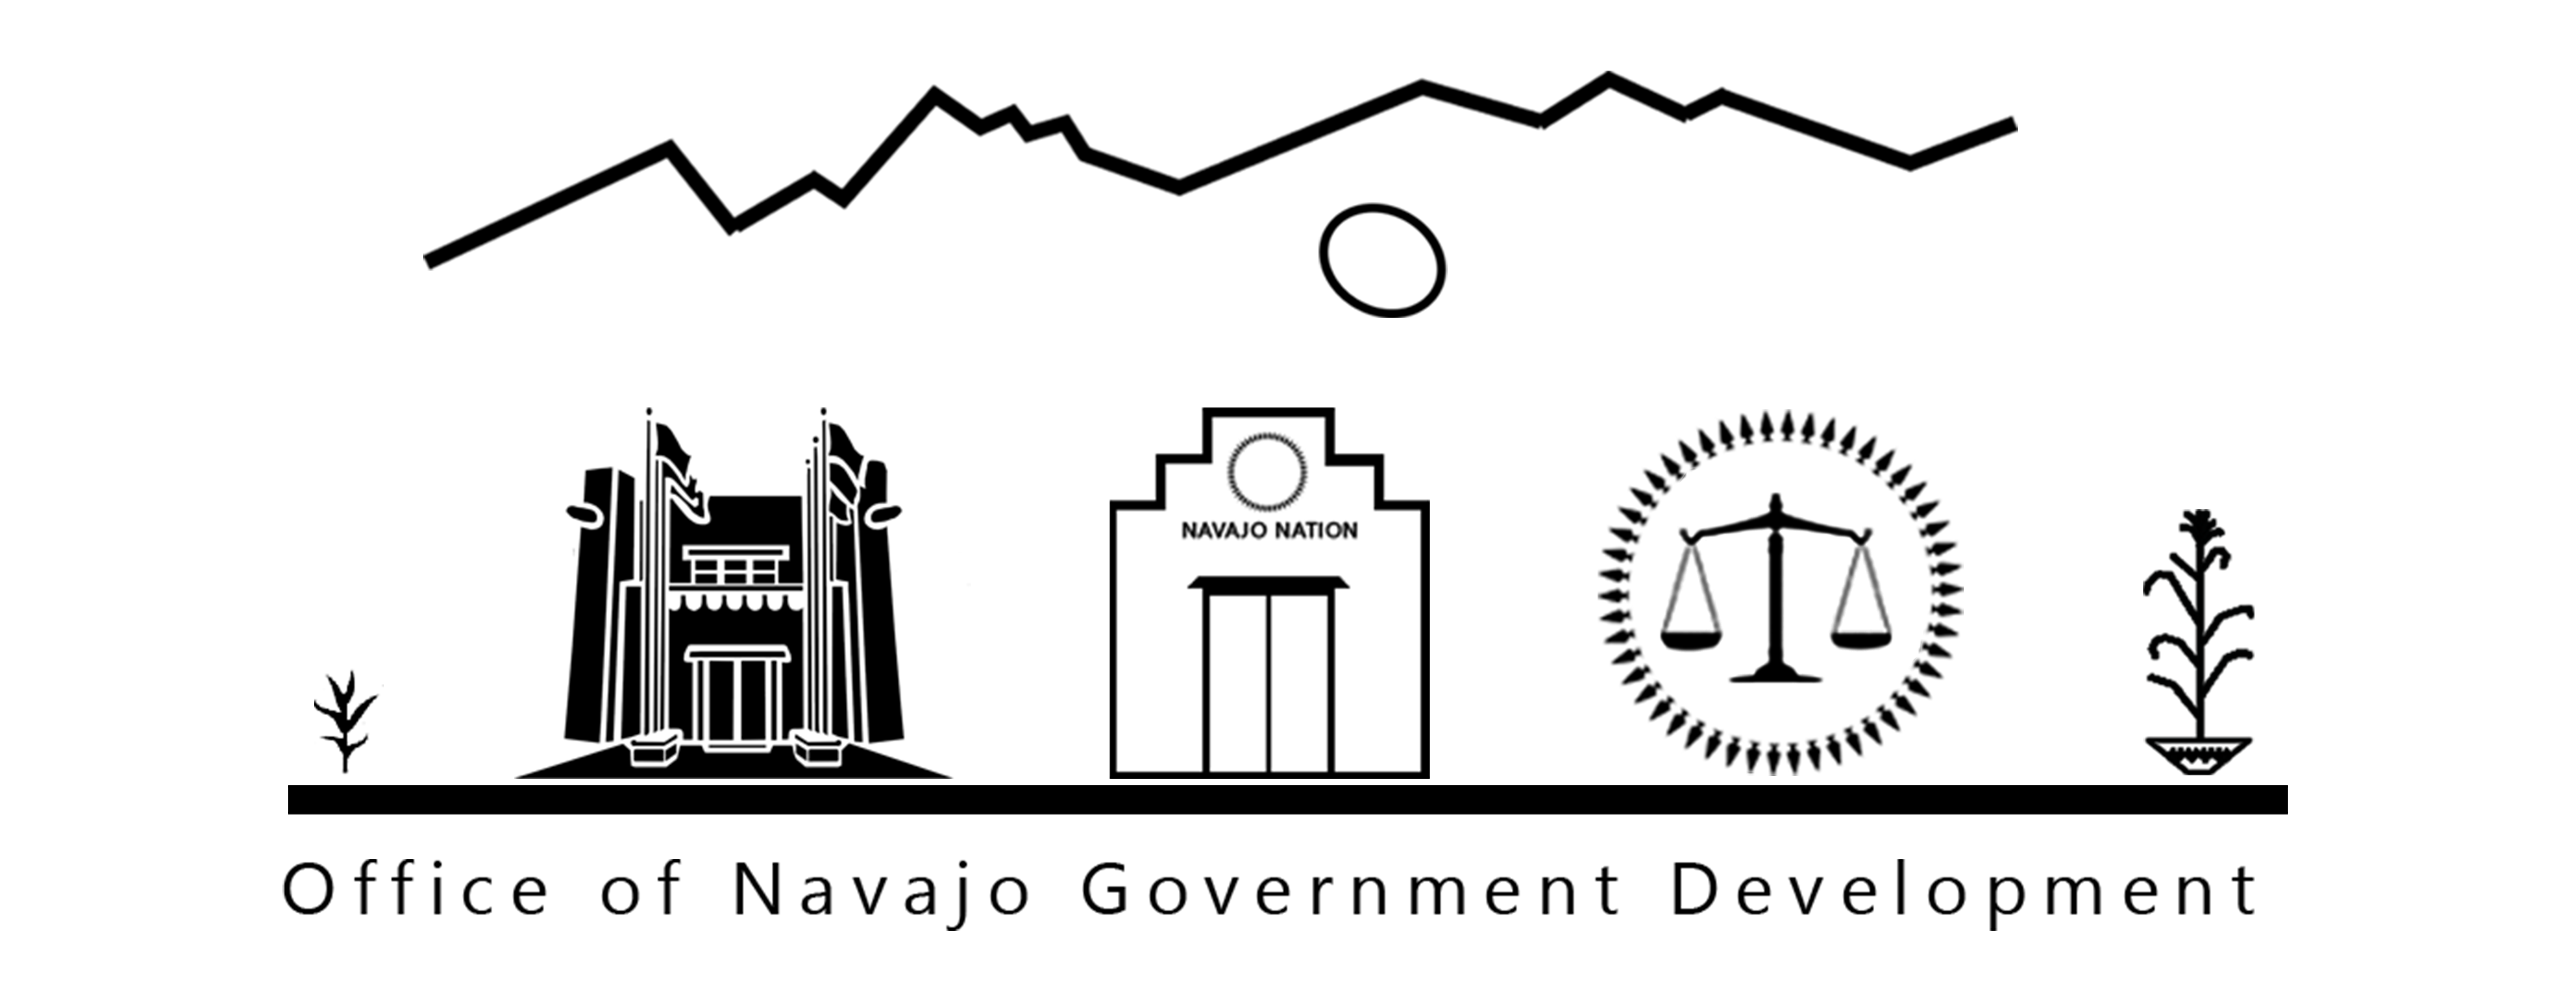 Office of Navajo Government Development